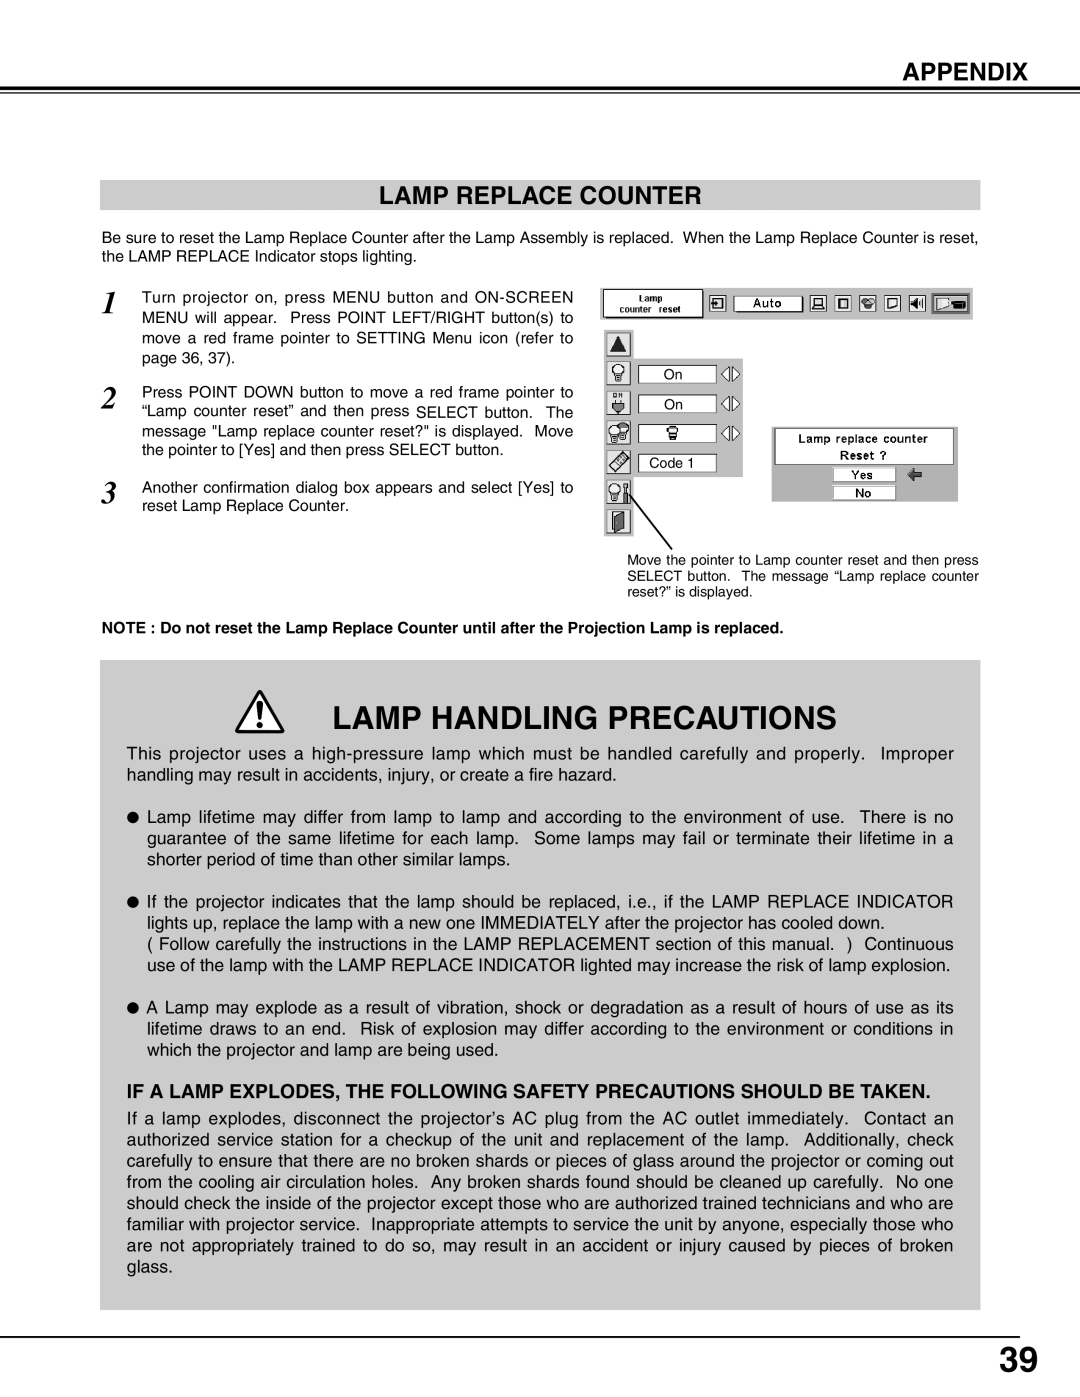 Christie Digital Systems 38-VIV207-01 user manual Appendix Lamp Replace Counter, Lamp Handling Precautions 